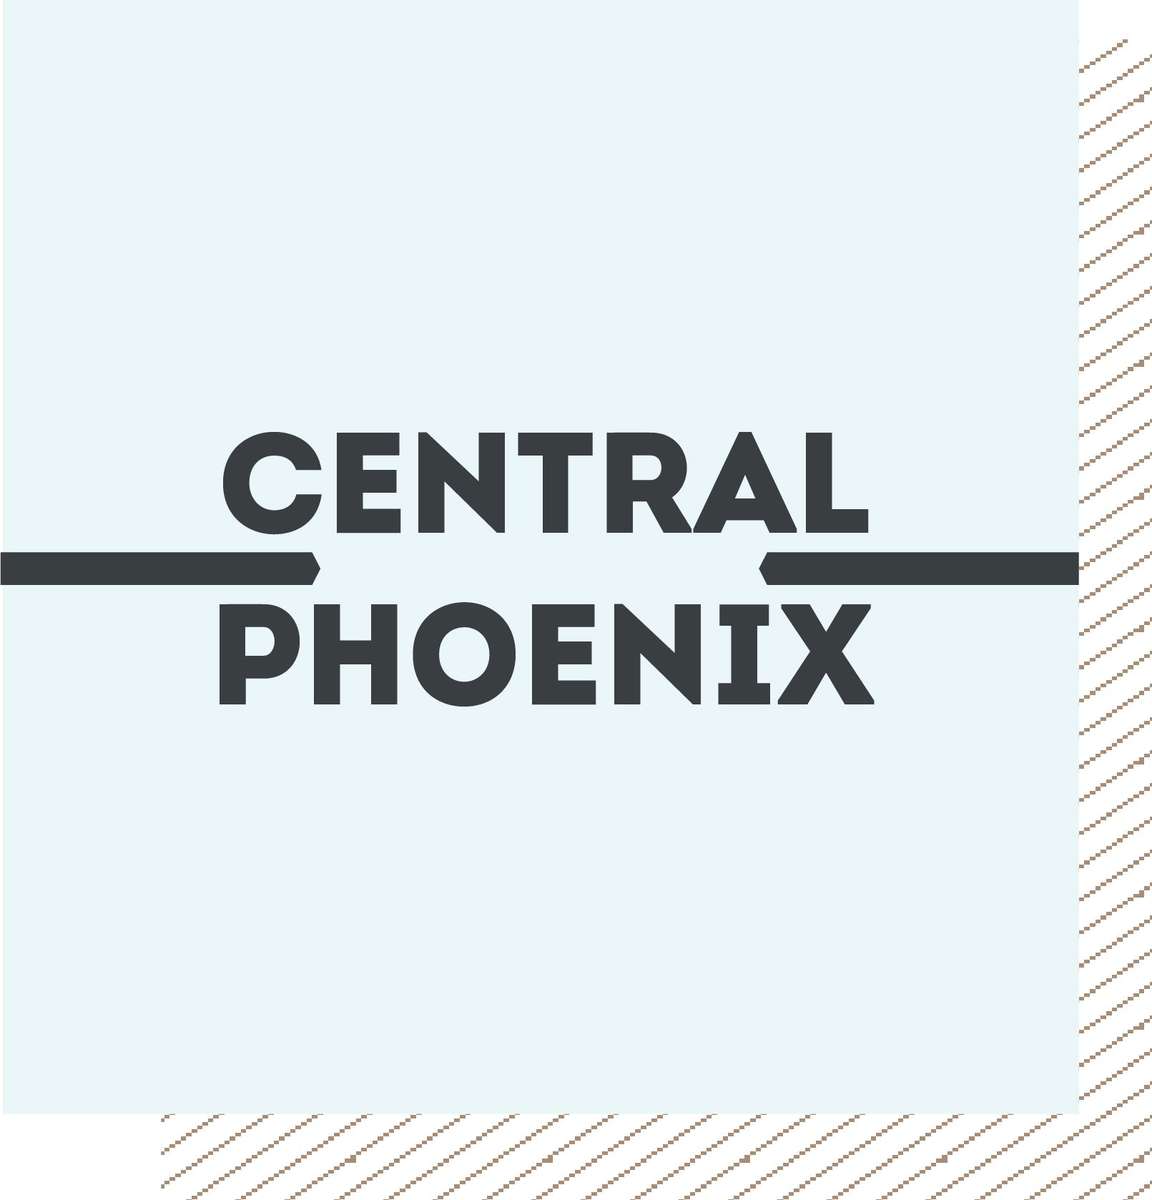 CENTRAL PHOENIX